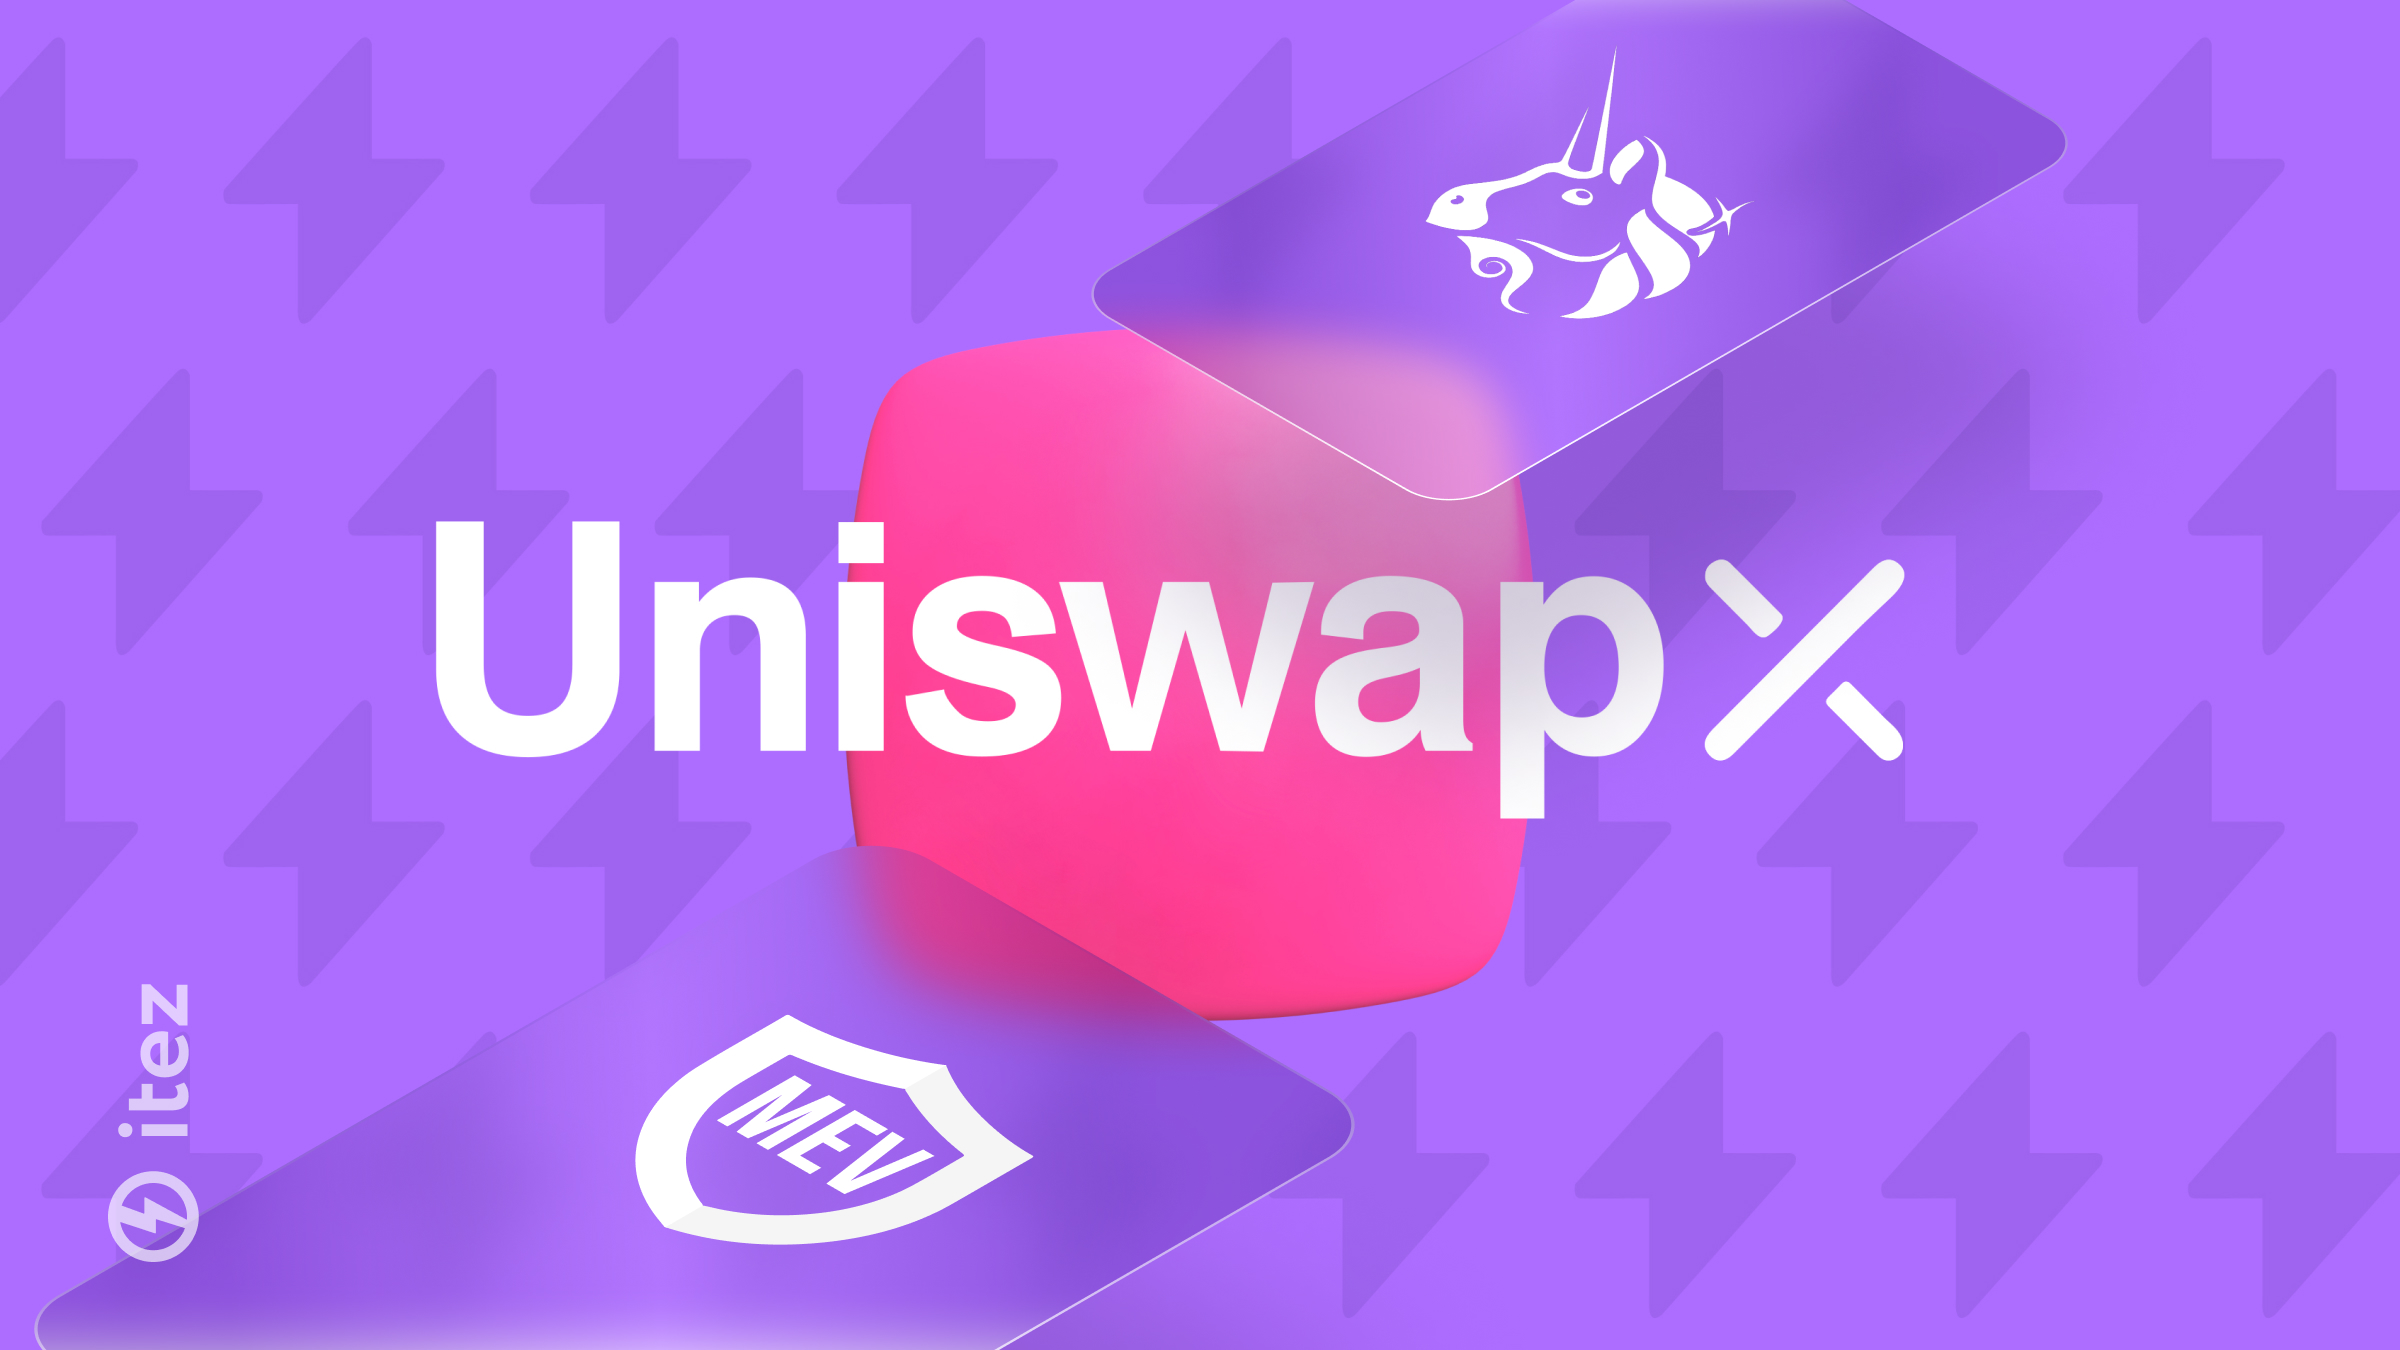 Uniswap unveils a new protocol